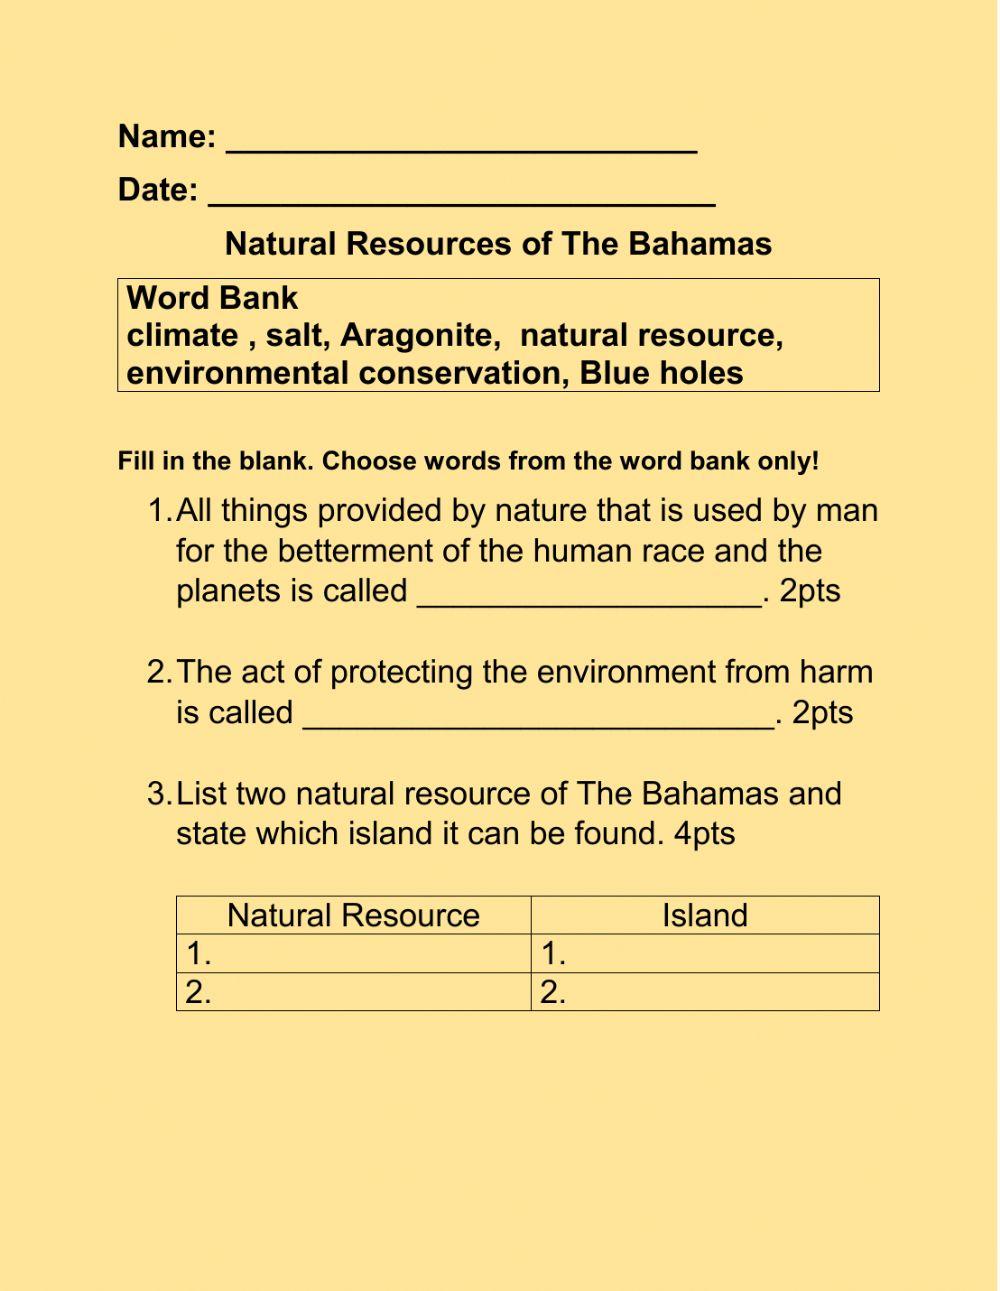 Natutal Resources